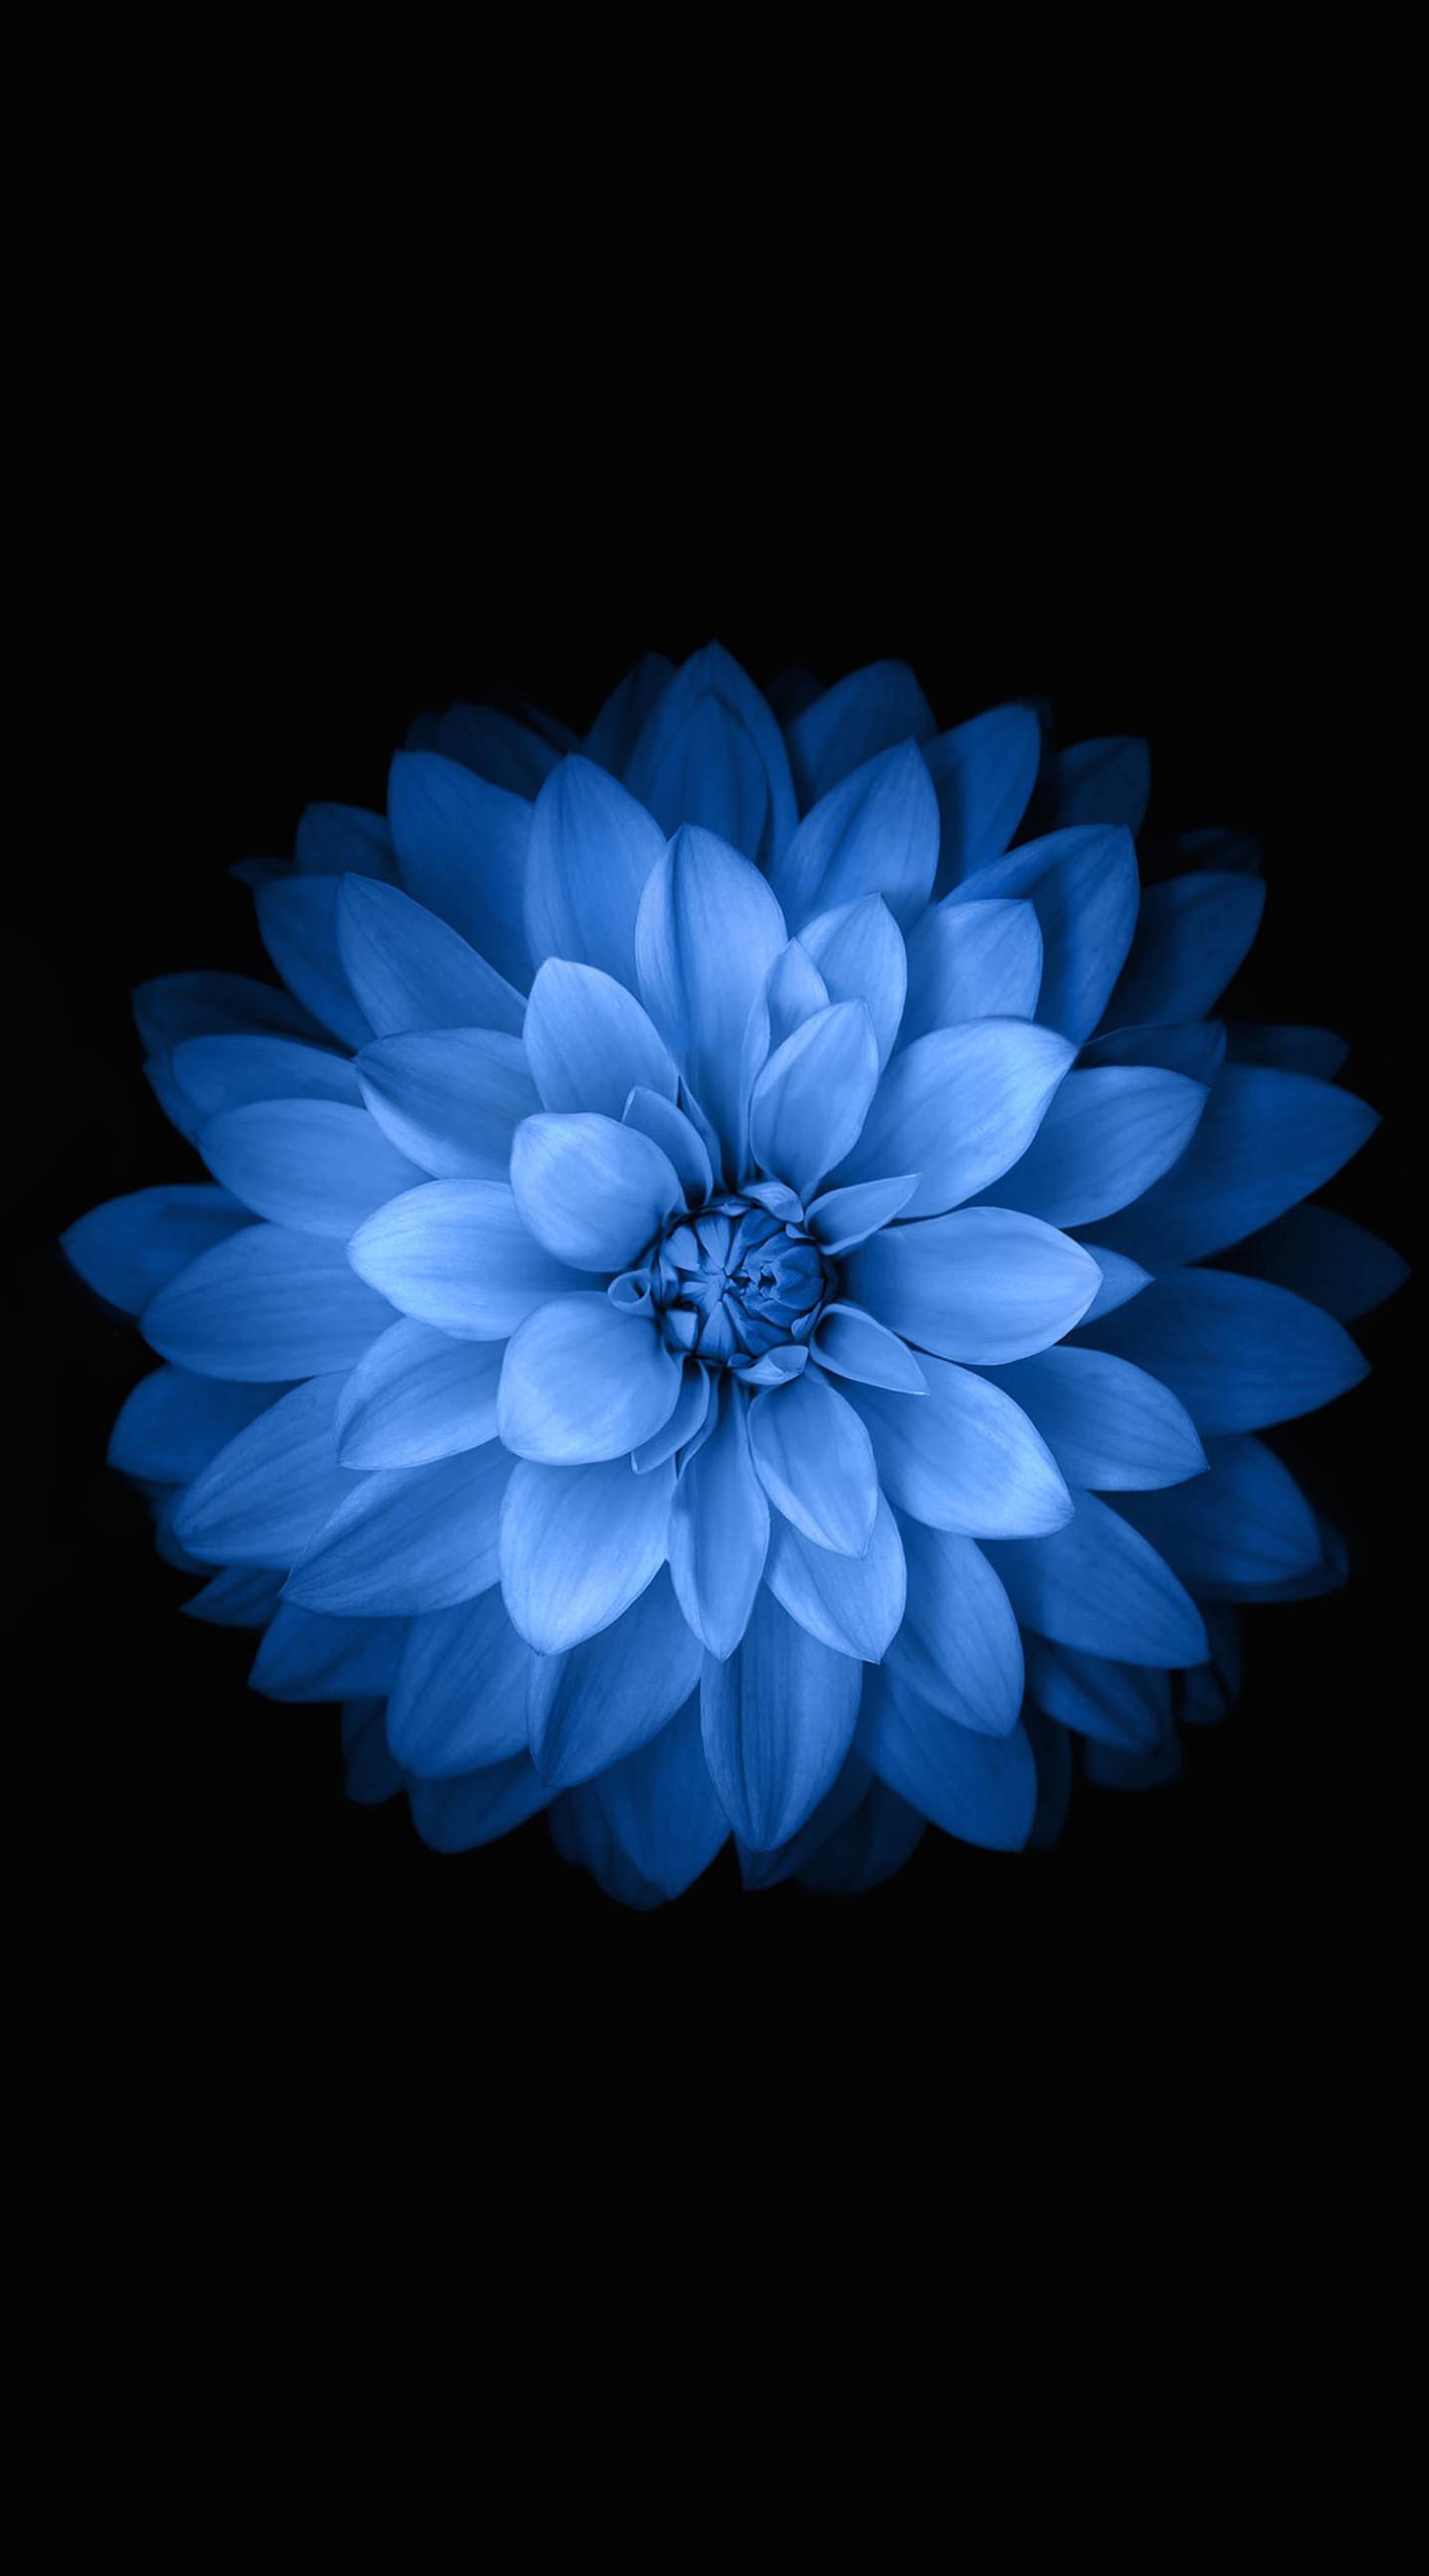 Blue black flower | wallpaper.sc iPhone6sPlus